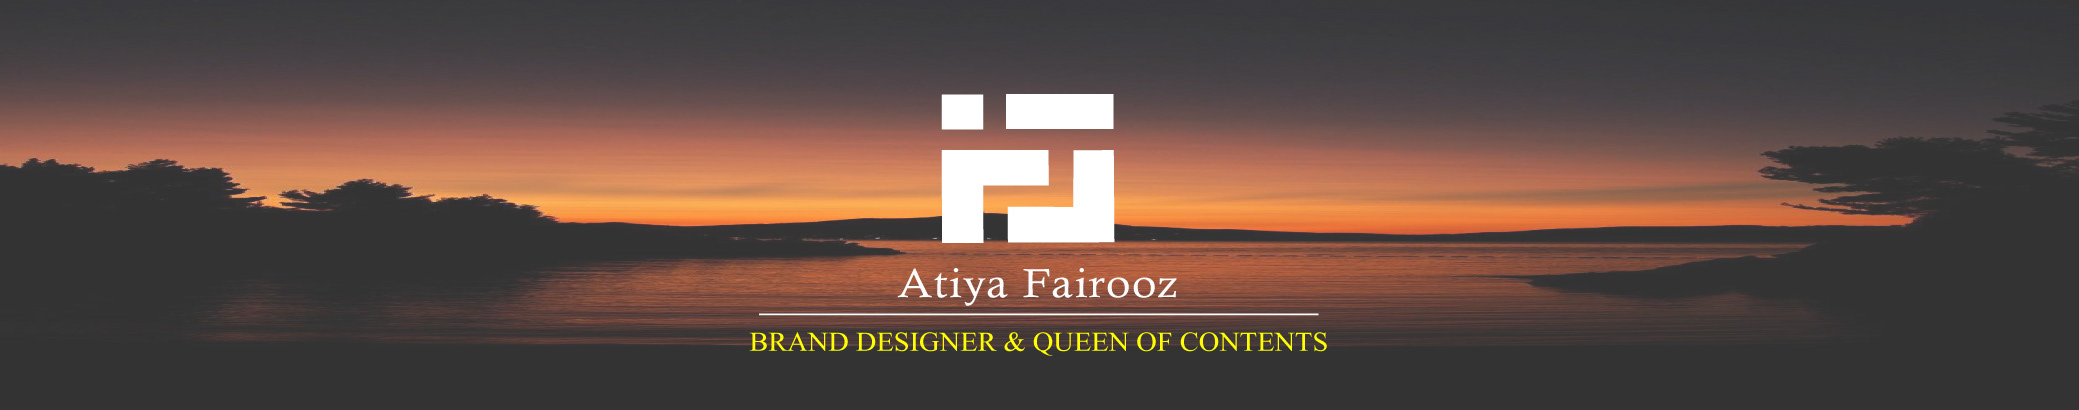 Atiya Fairooz's profile banner